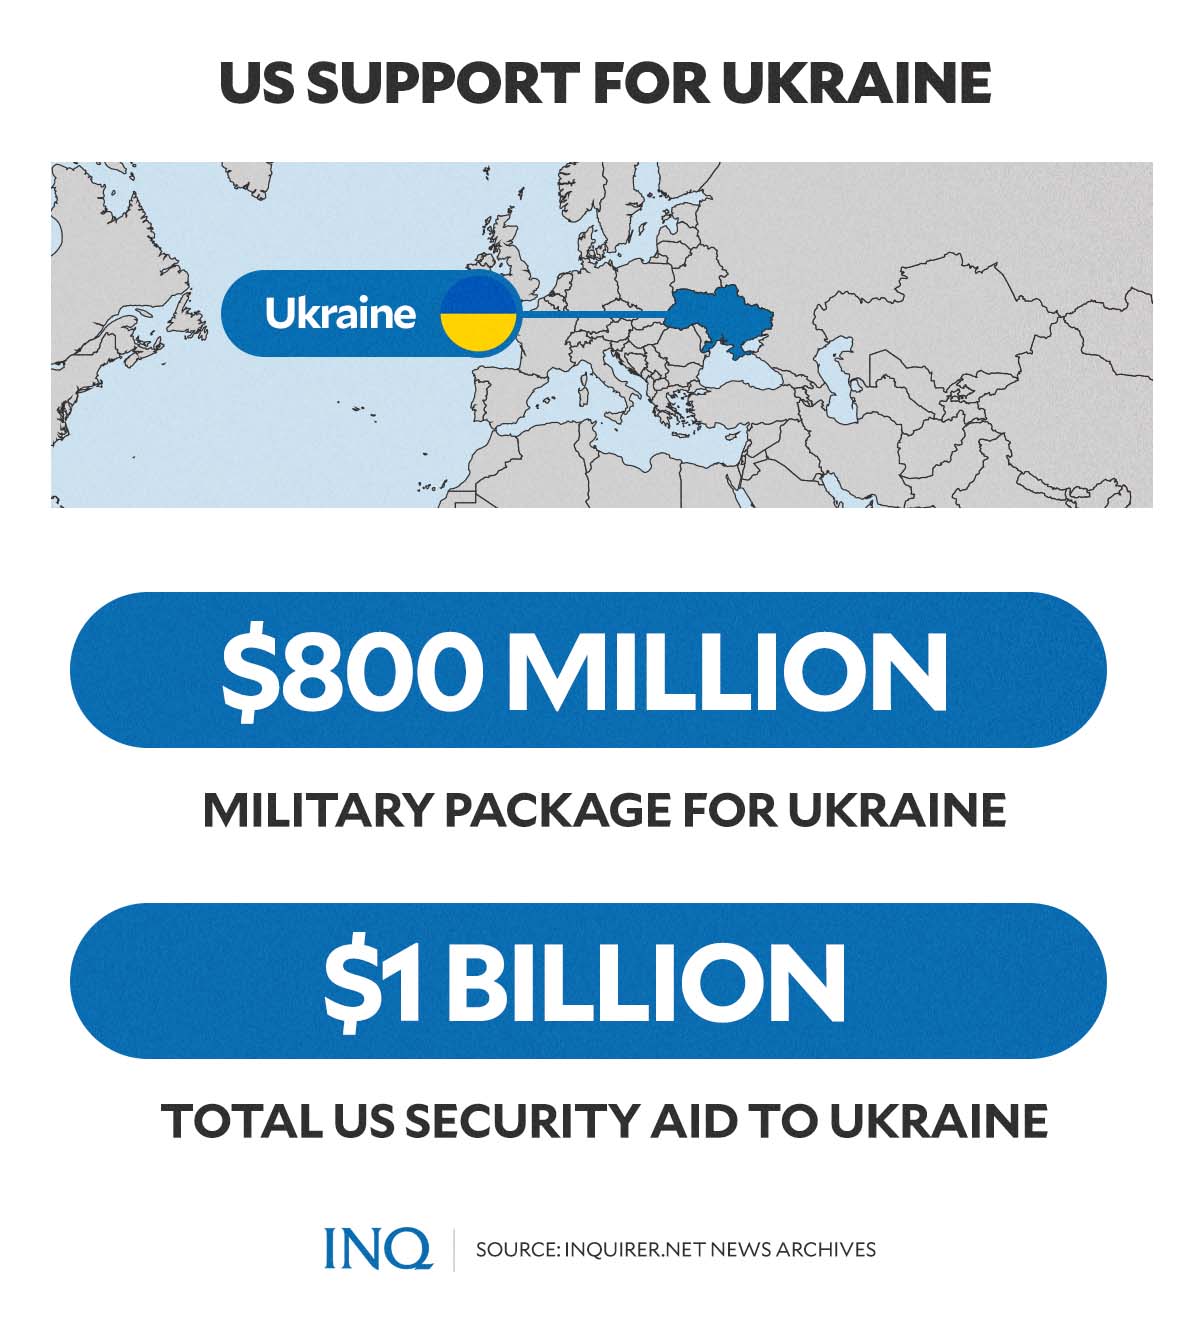 US support for Ukraine